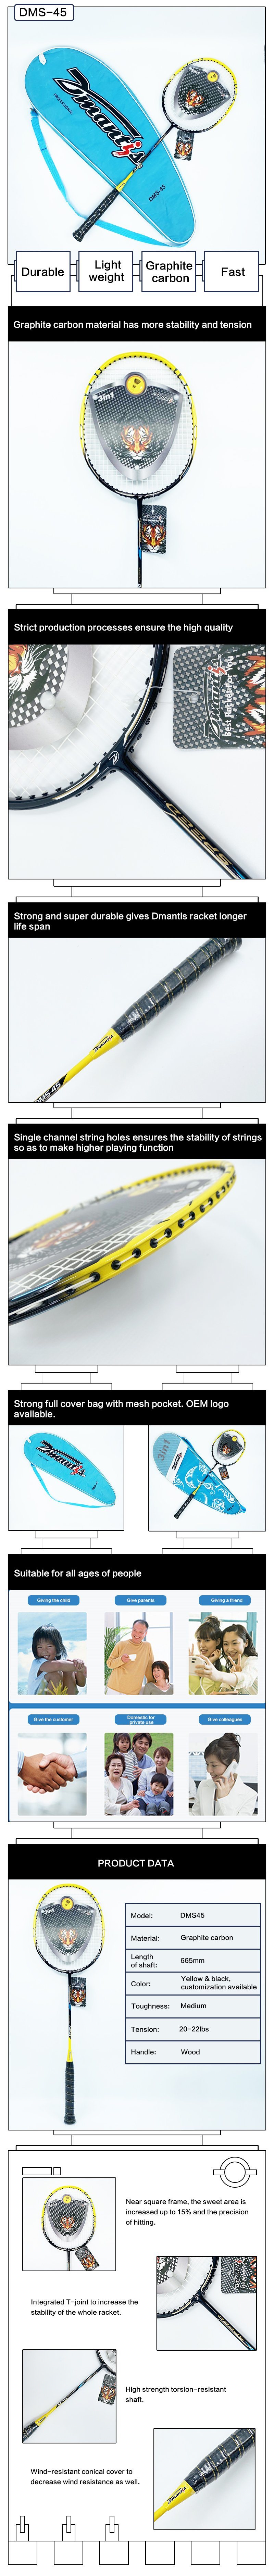 Professional Design Badminton Rackets Half Carbon Fiber DMS45